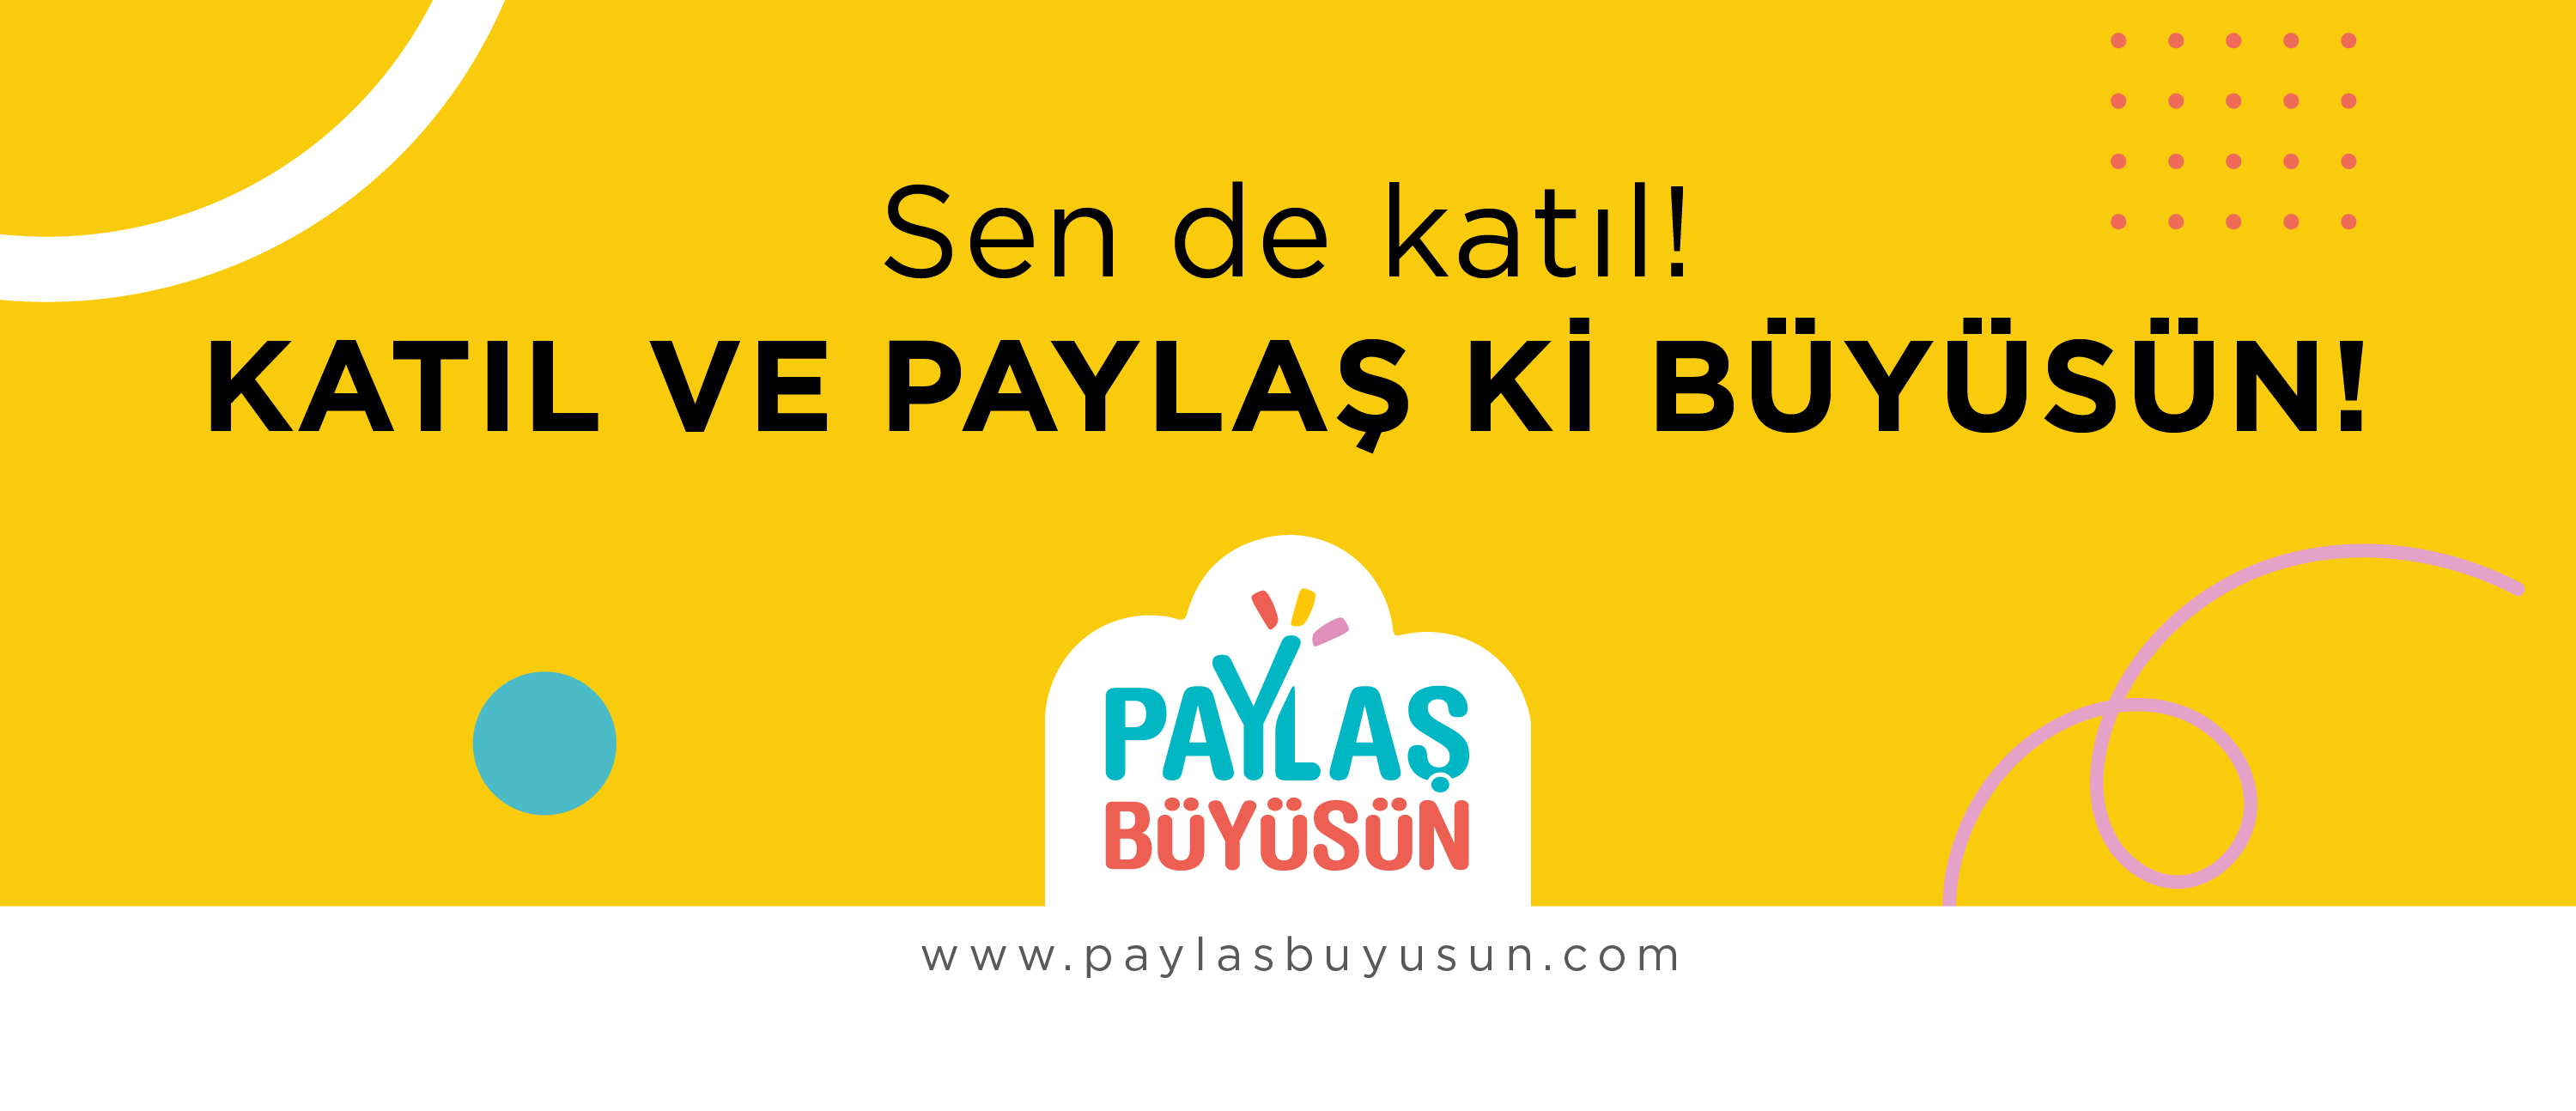 www.paylasbuyusun.com